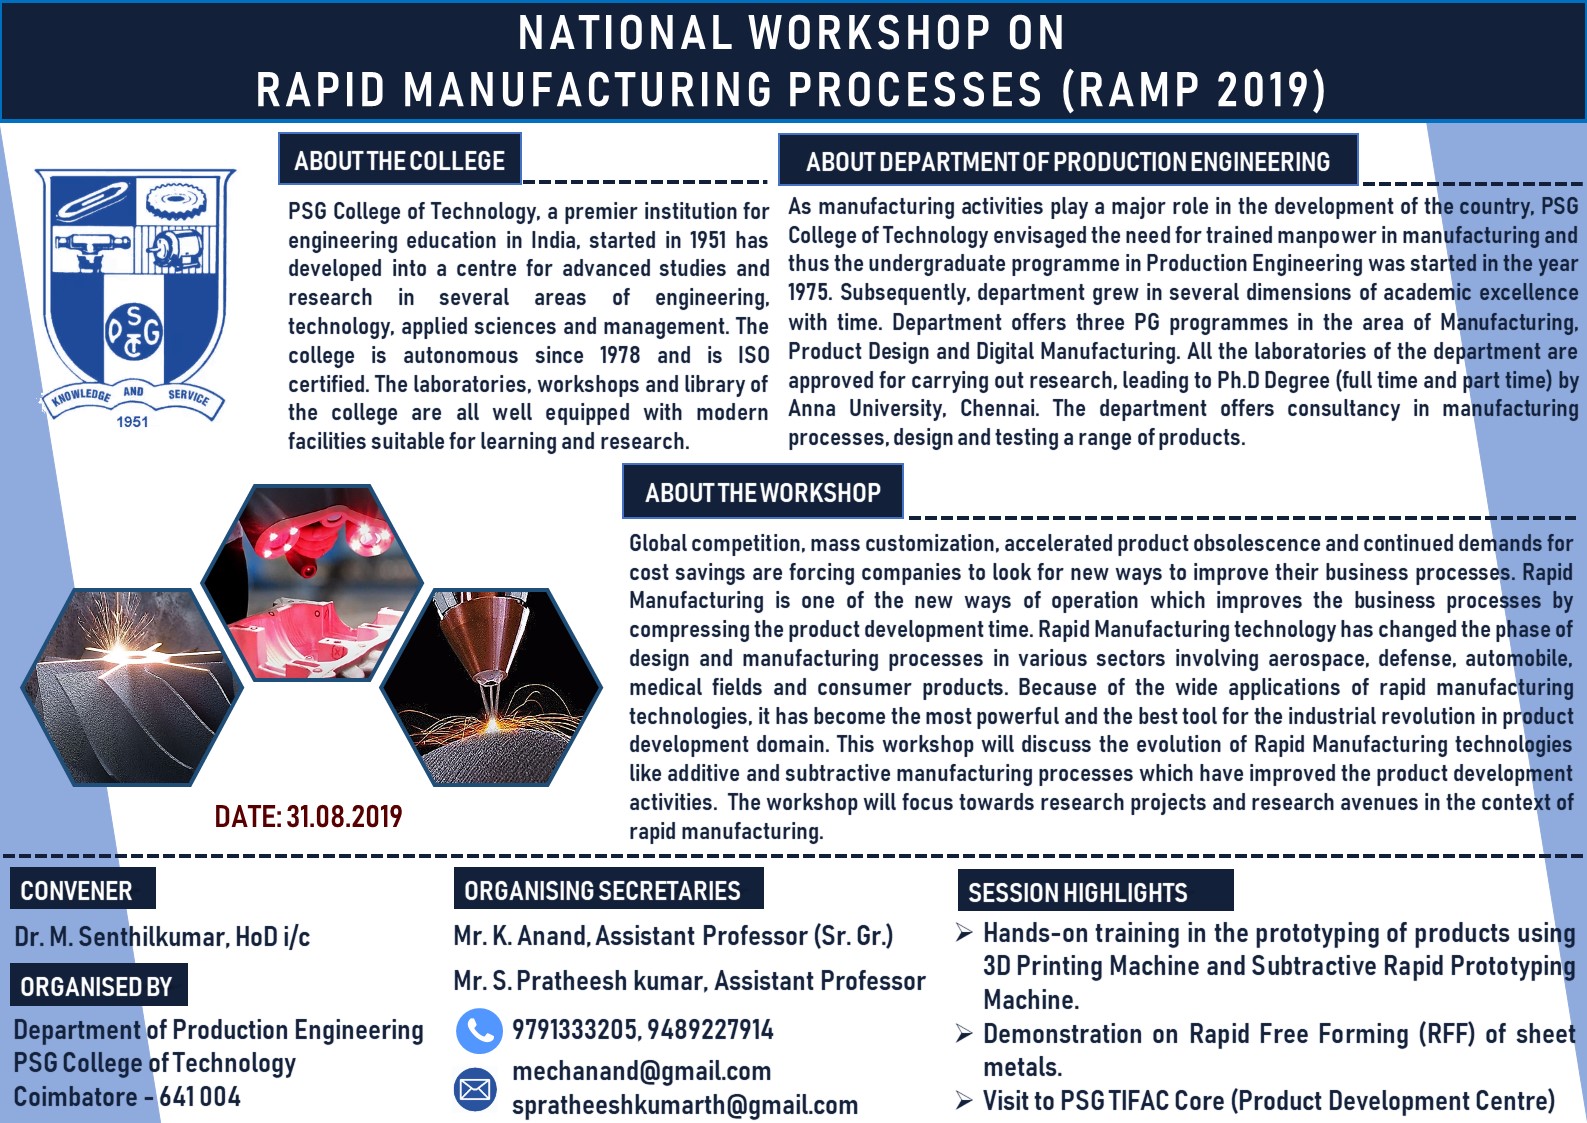 NATIONAL WORKSHOP ON RAPID MANUFACTURING PROCESSES (RAMP 2019), Coimbatore, Tamil Nadu, India